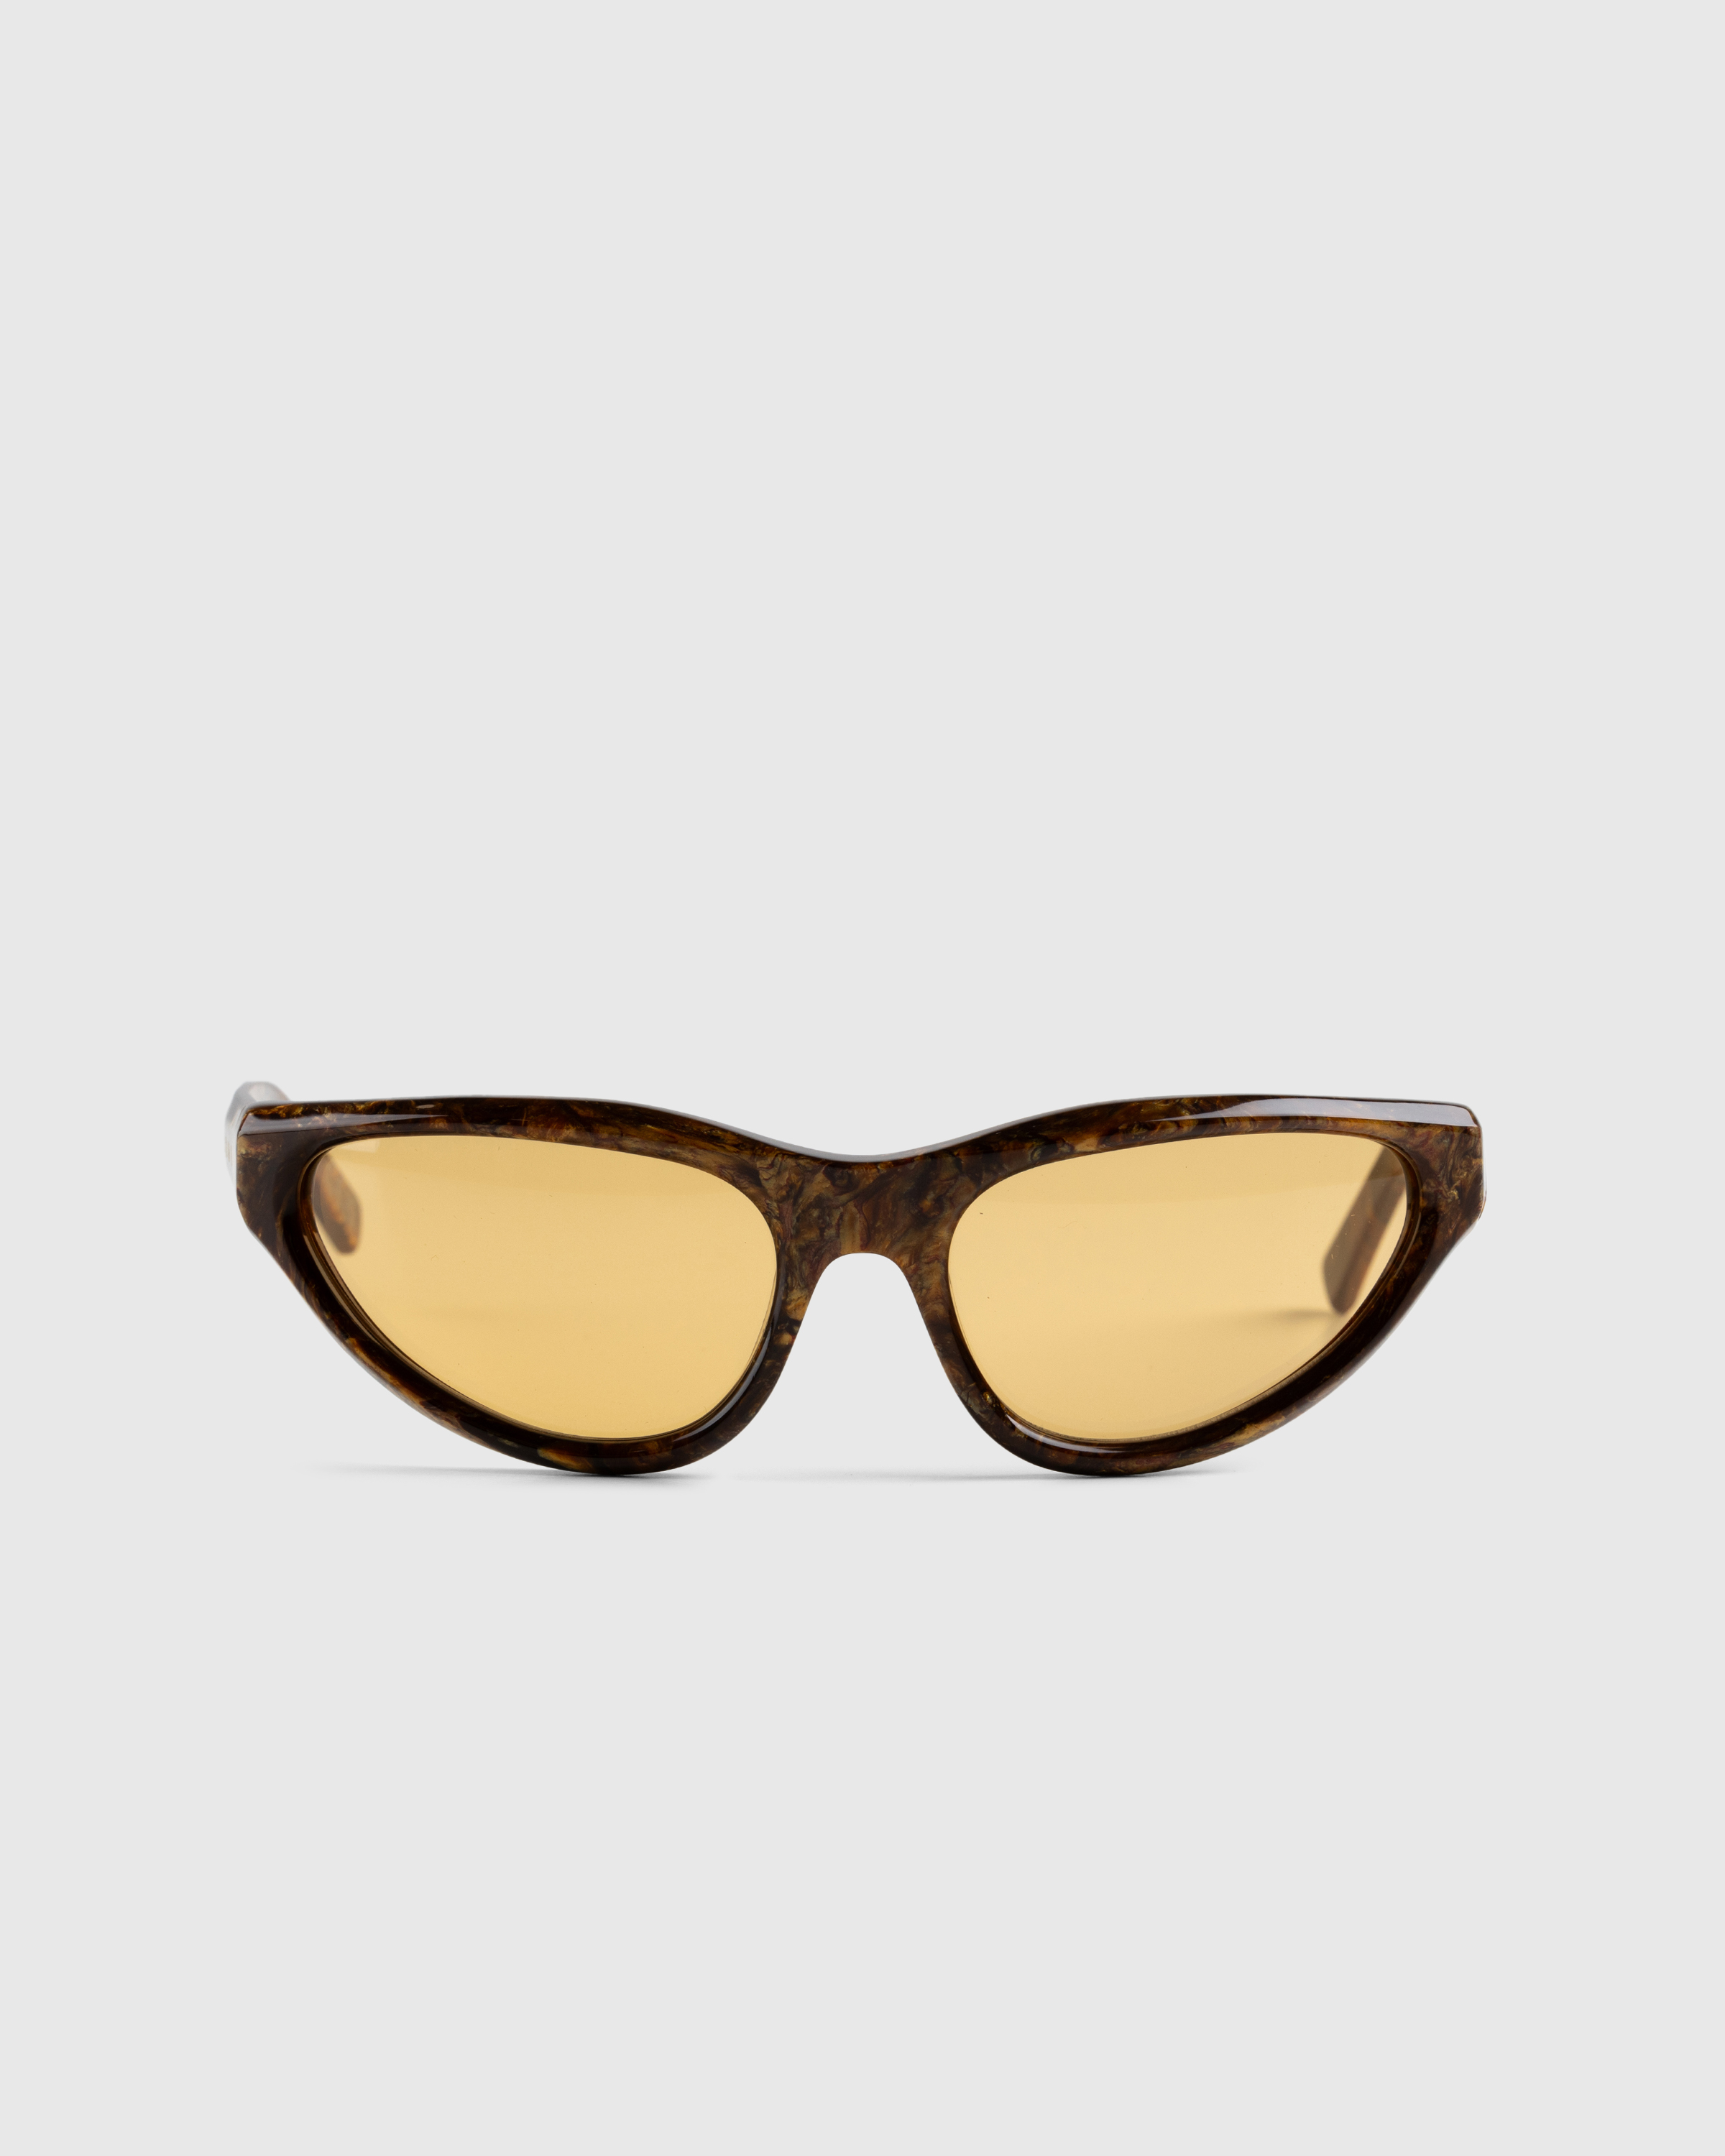 Marni x retrosuperfuture – Mavericks Radica - Sunglasses - Brown - Image 1